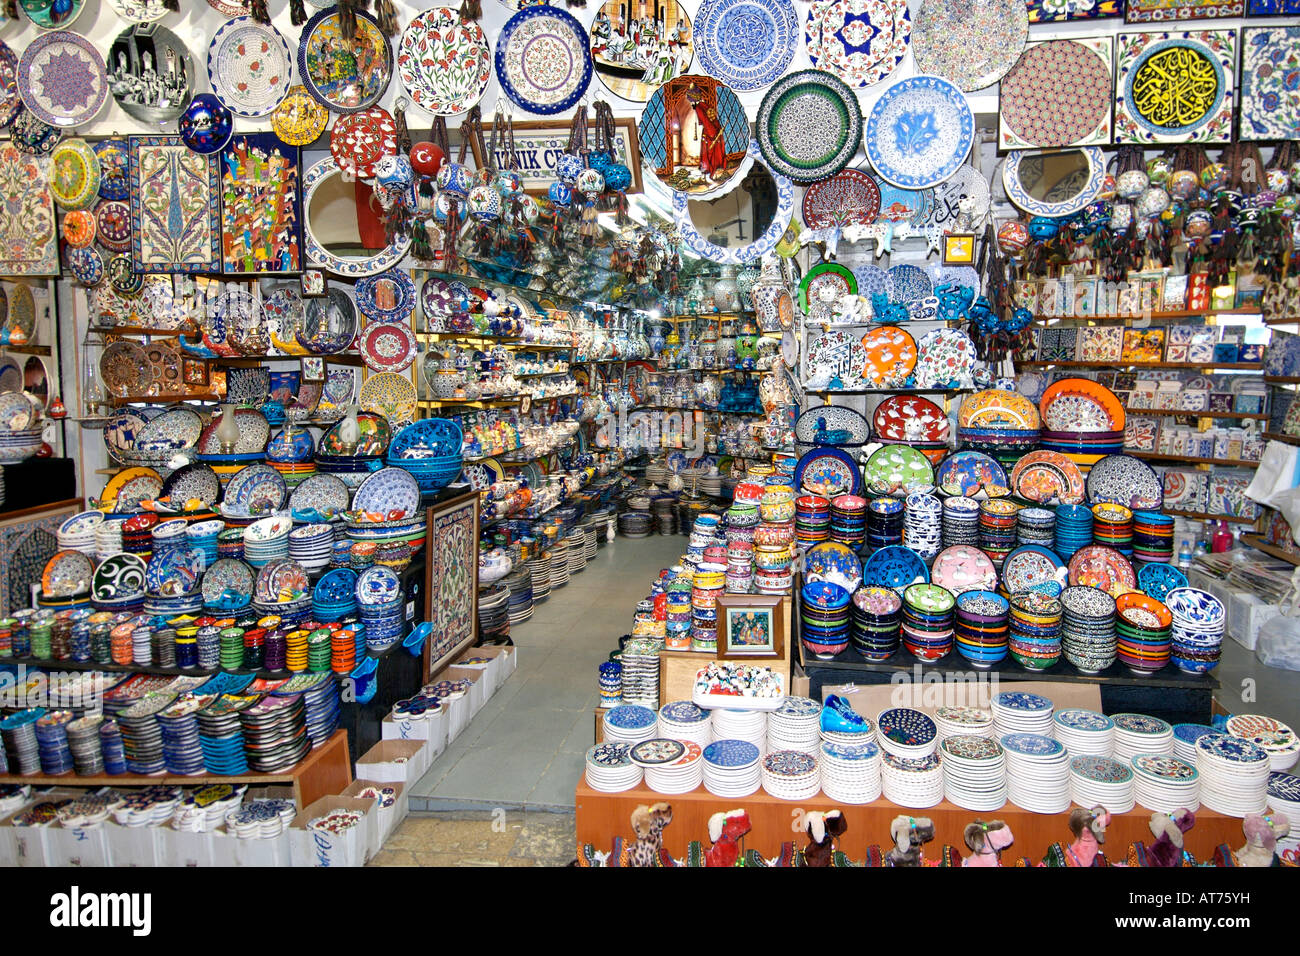 A shop in the Kapalı Çarşı (Covered Market or bazaar) in Istanbul, Turkey. Stock Photo